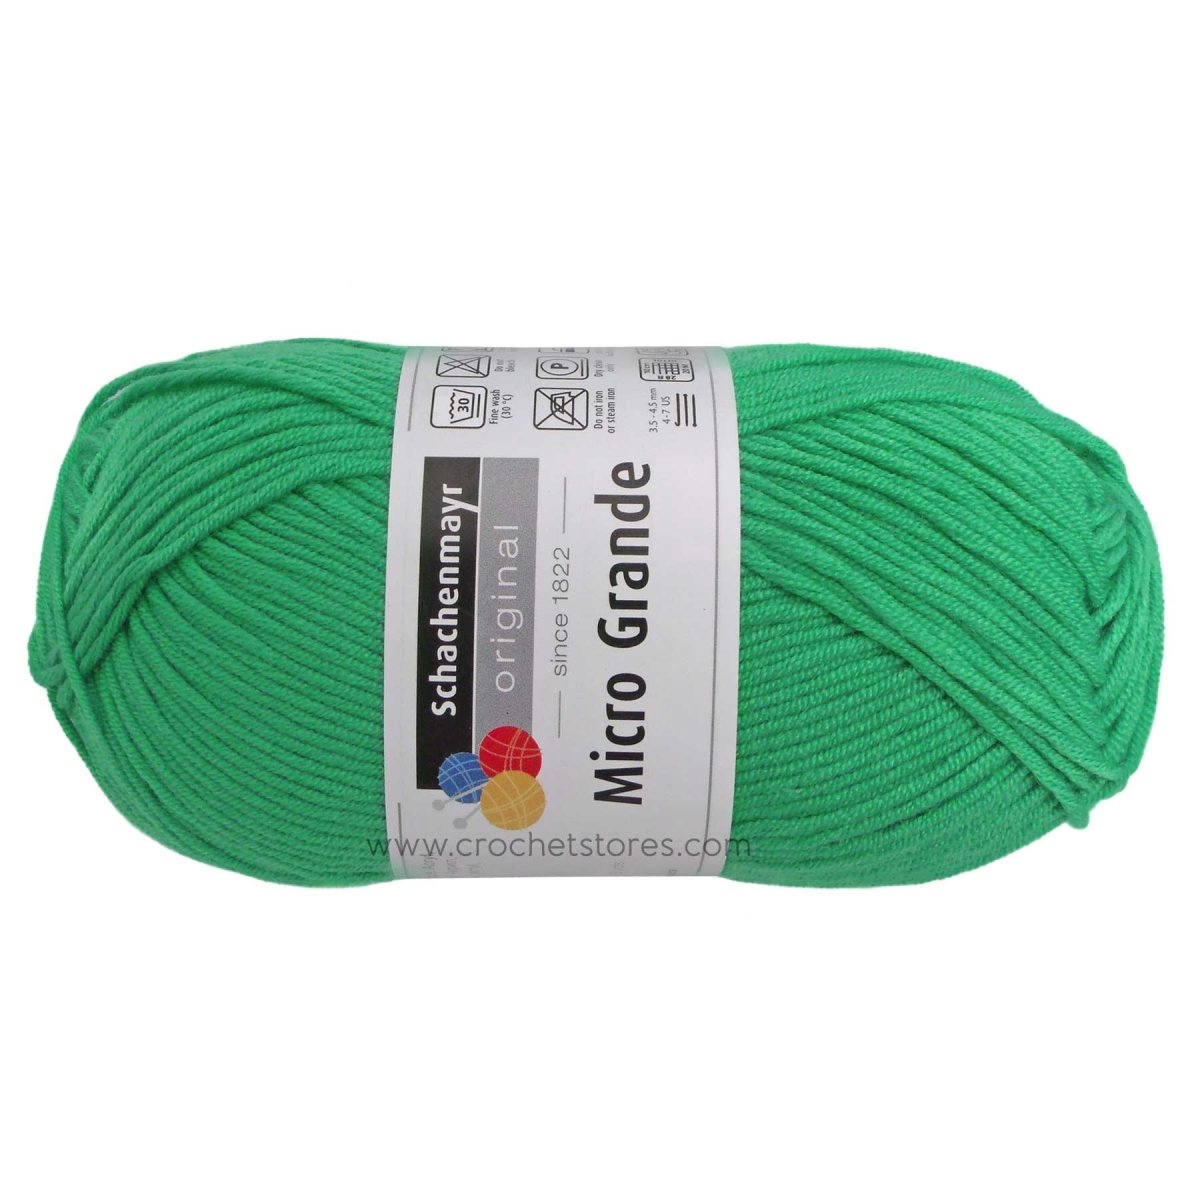 MICRO GRANDE - Crochetstores9807313-1704053859012409